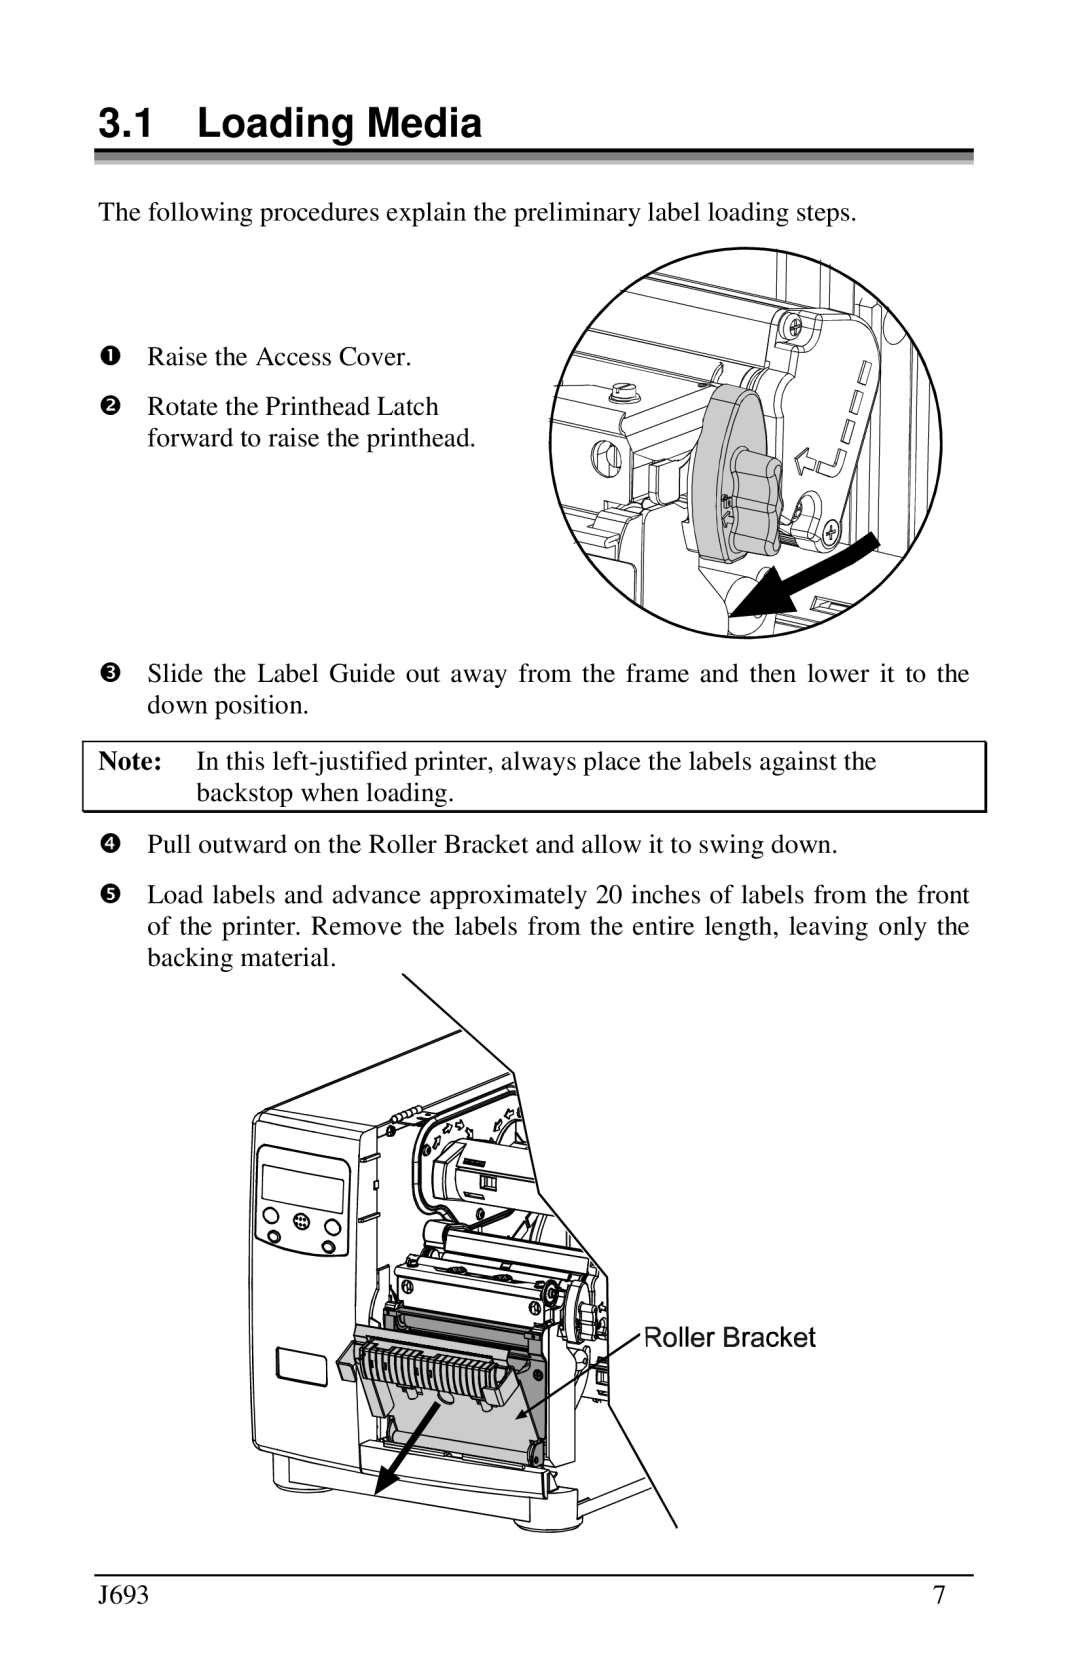 Pitney Bowes J693 manual Loading Media, Rotate the Printhead Latch pforward to raise the printhead 